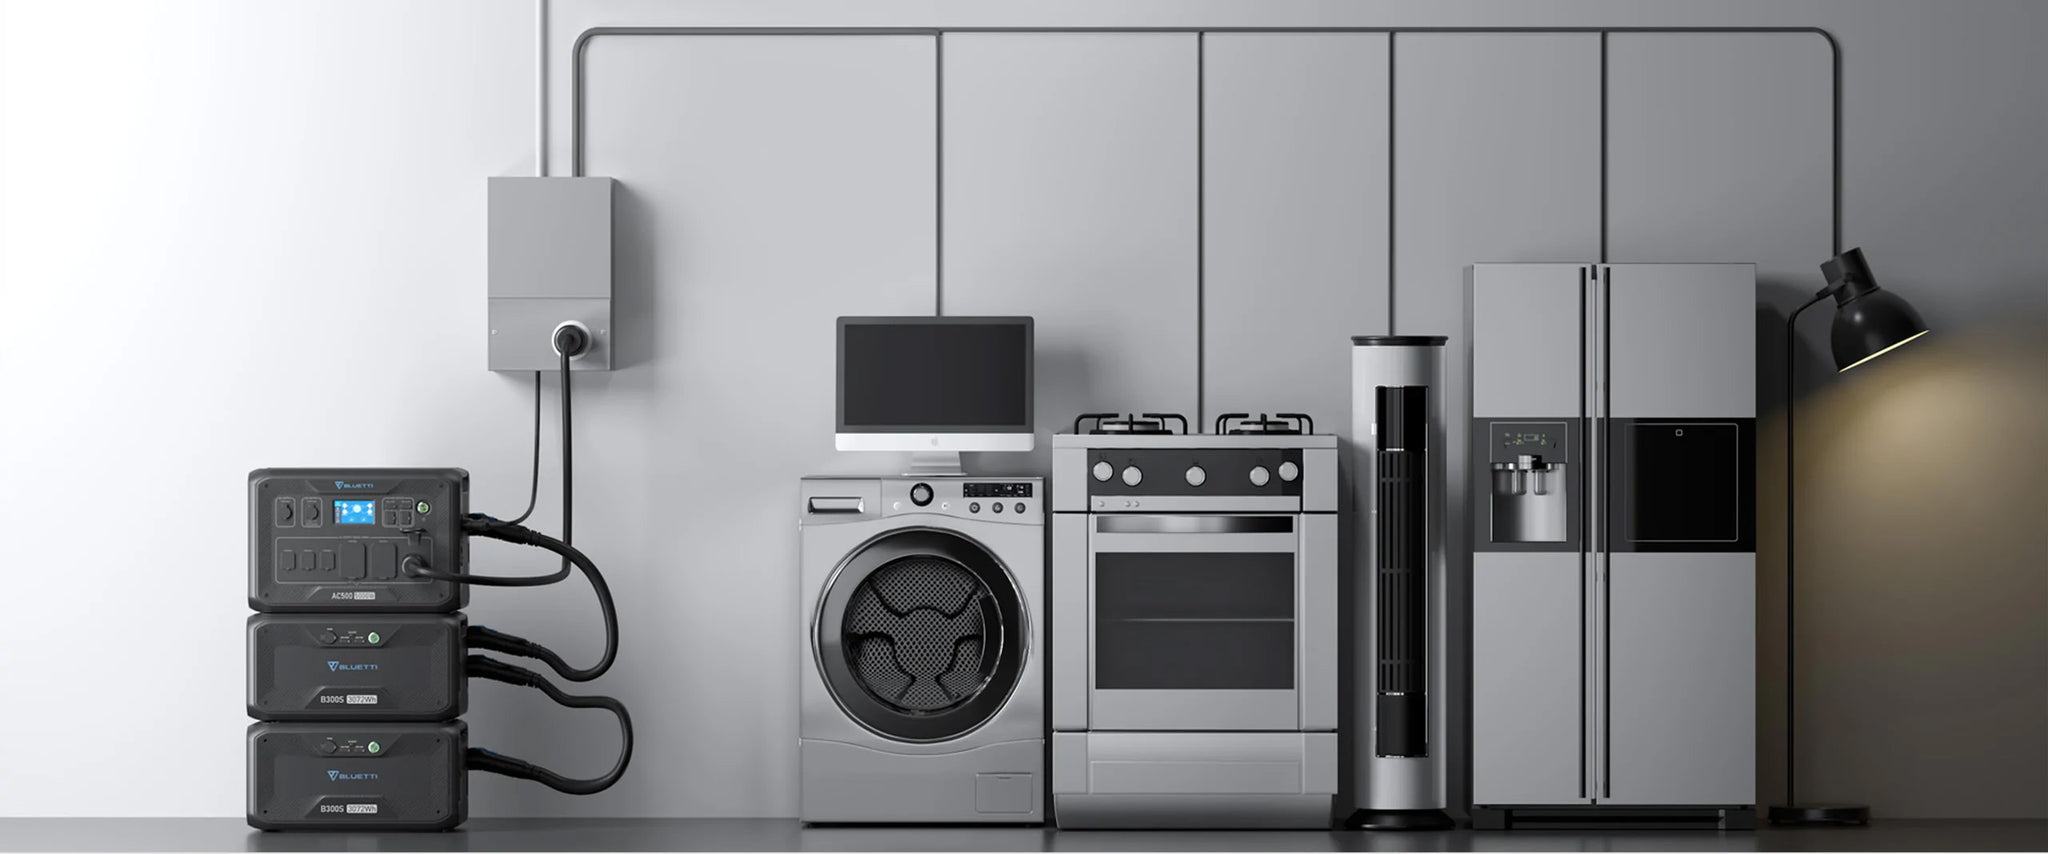 AC500 Powering Household Appliances